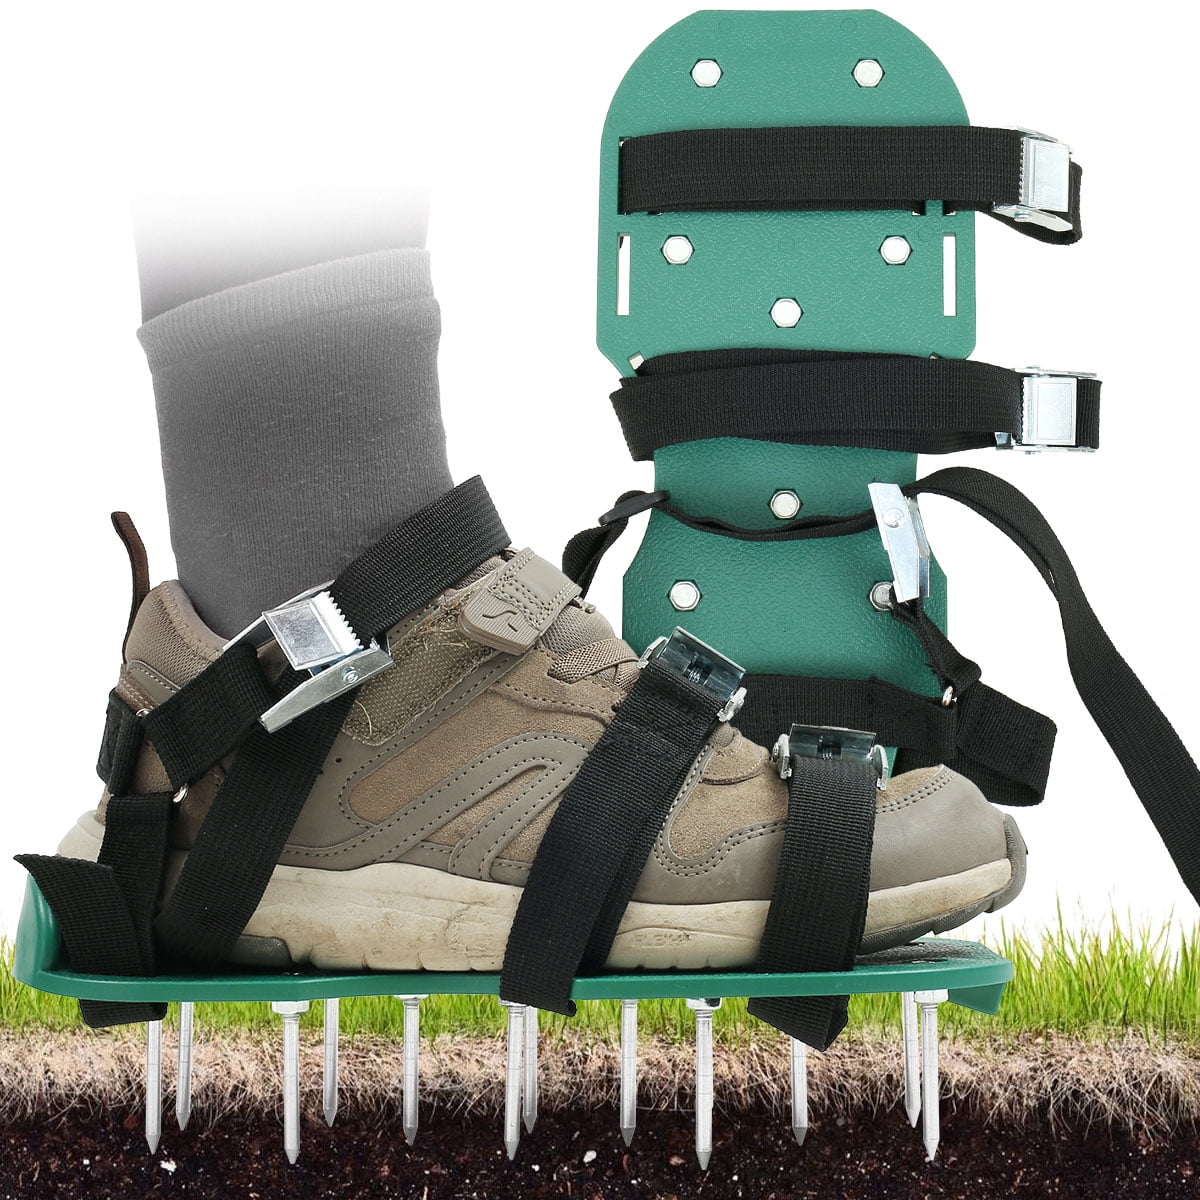 3 Straps/4 Straps Lawn Aerator Shoes 3 straps Gardening Tool lawn garden for grass etc patio